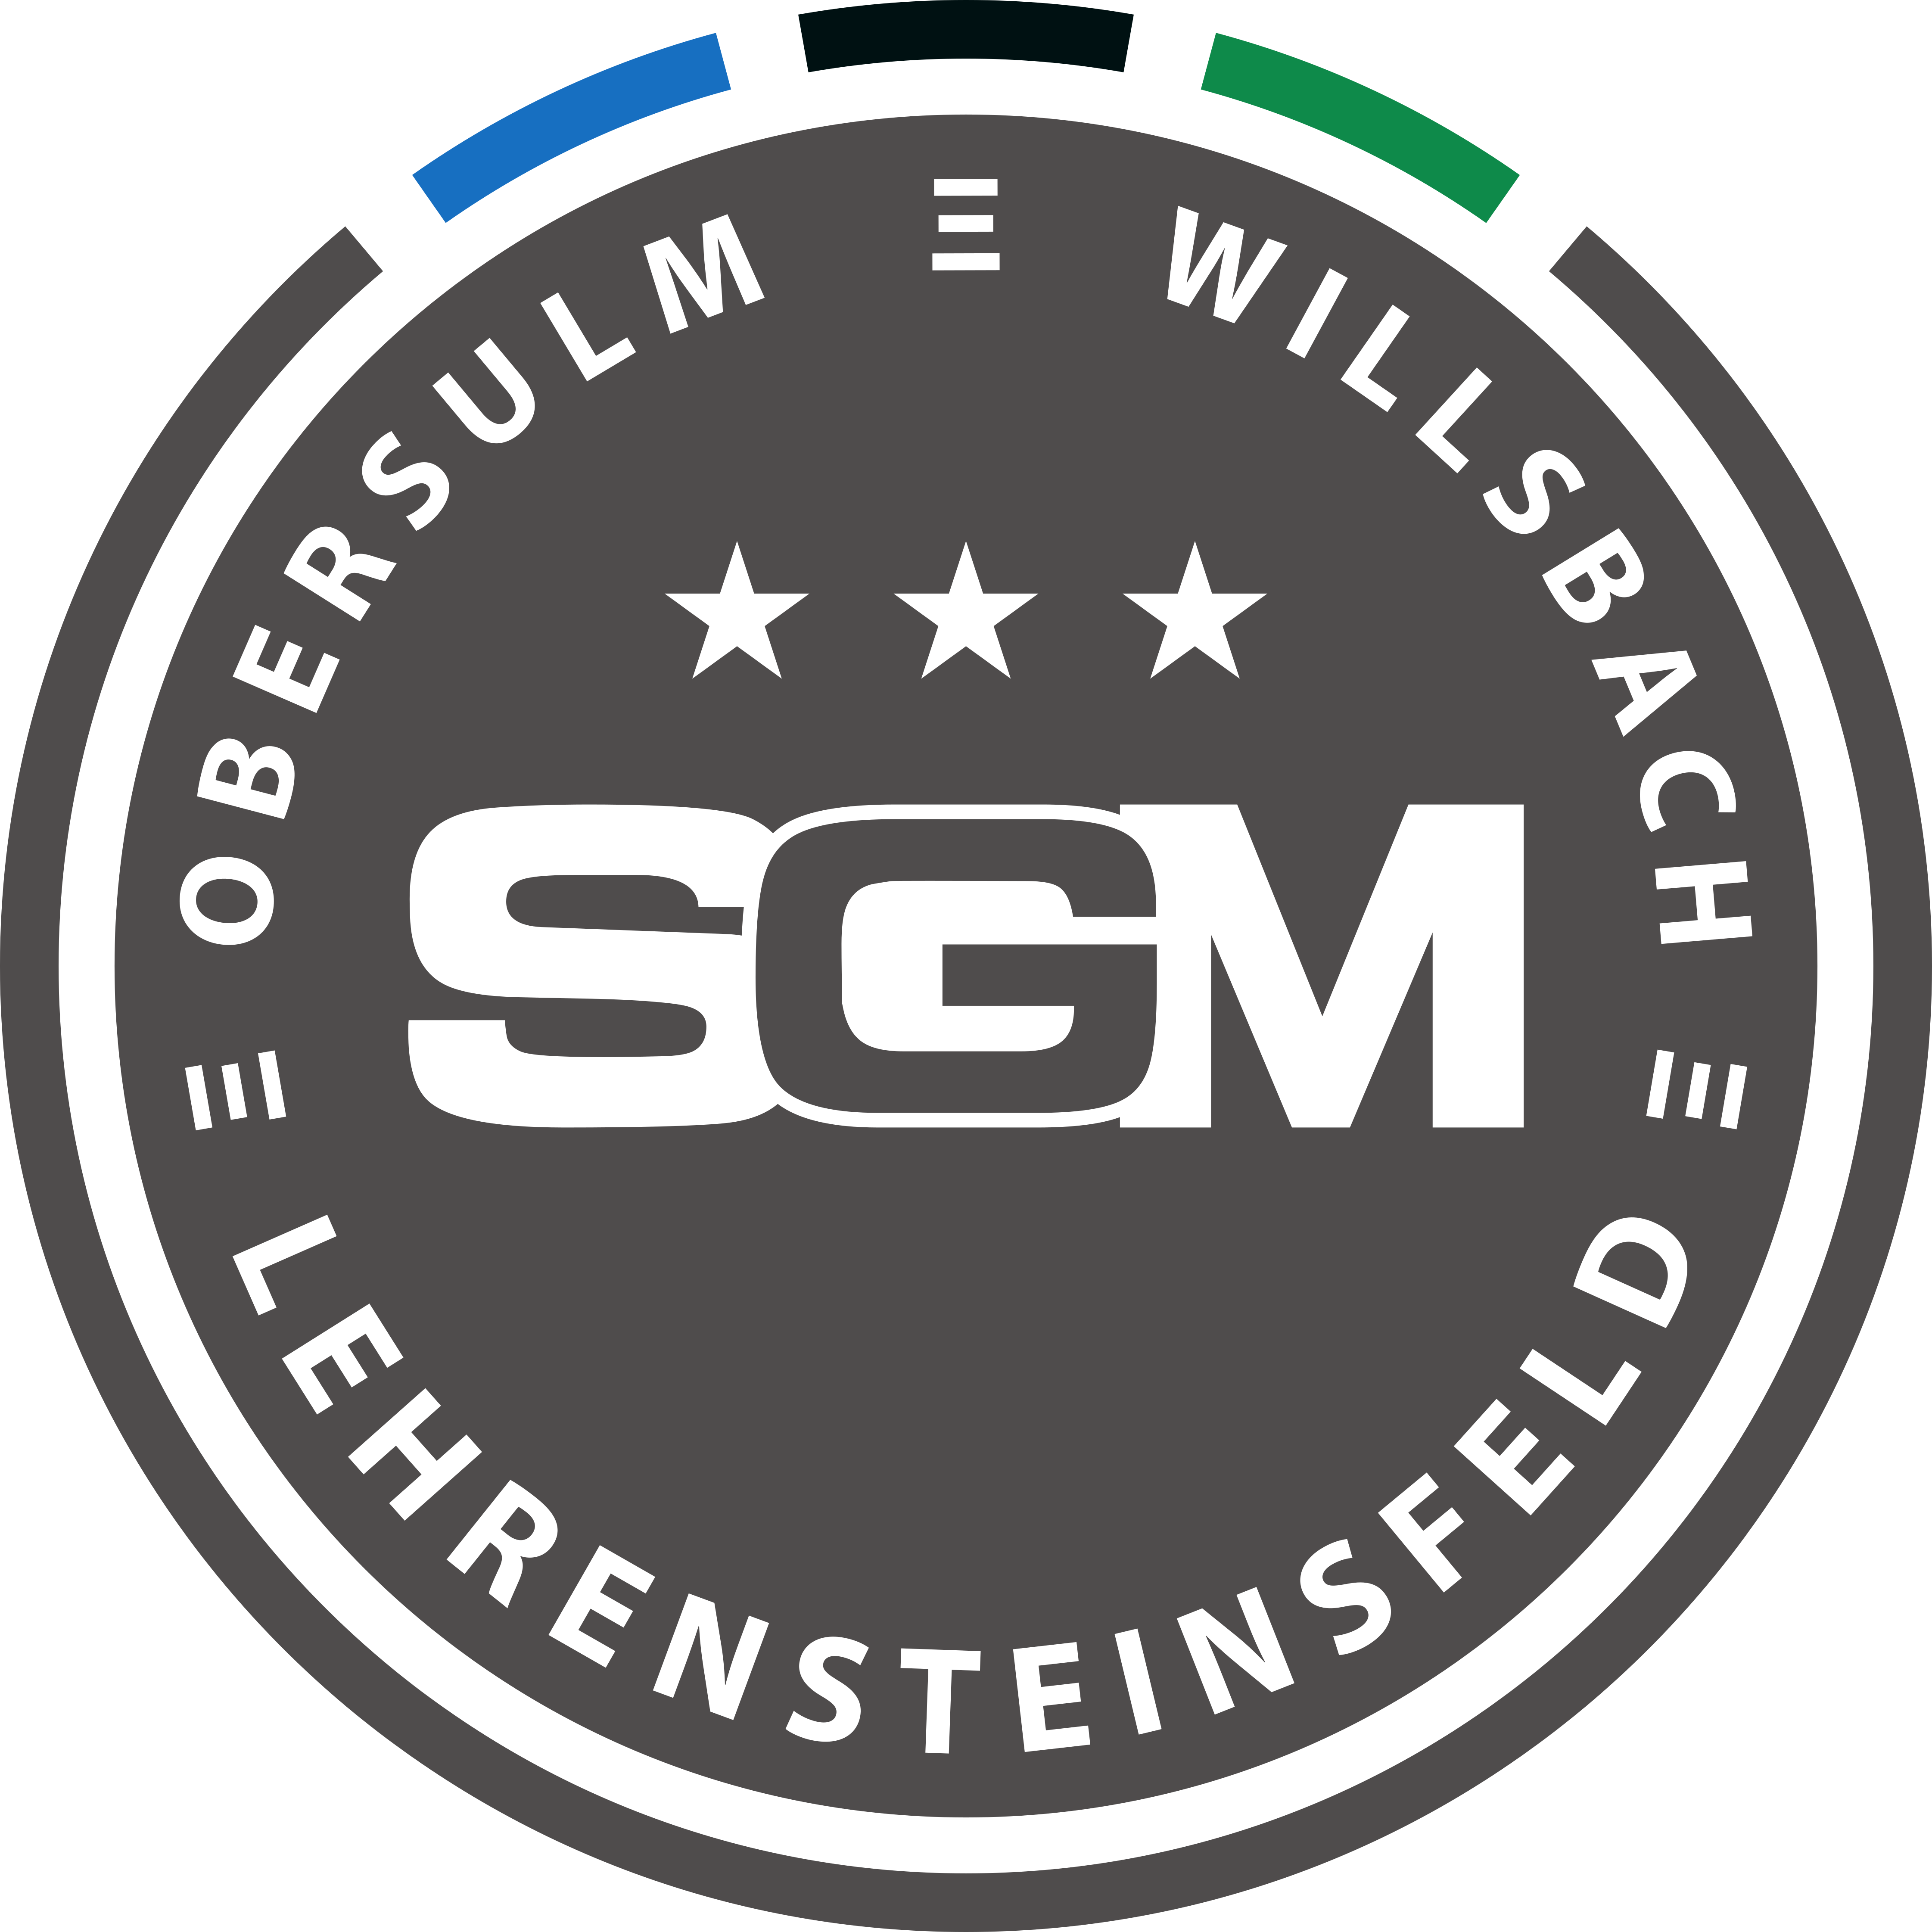 SGM Lehrenst./Obersulm/Willsb. Logo